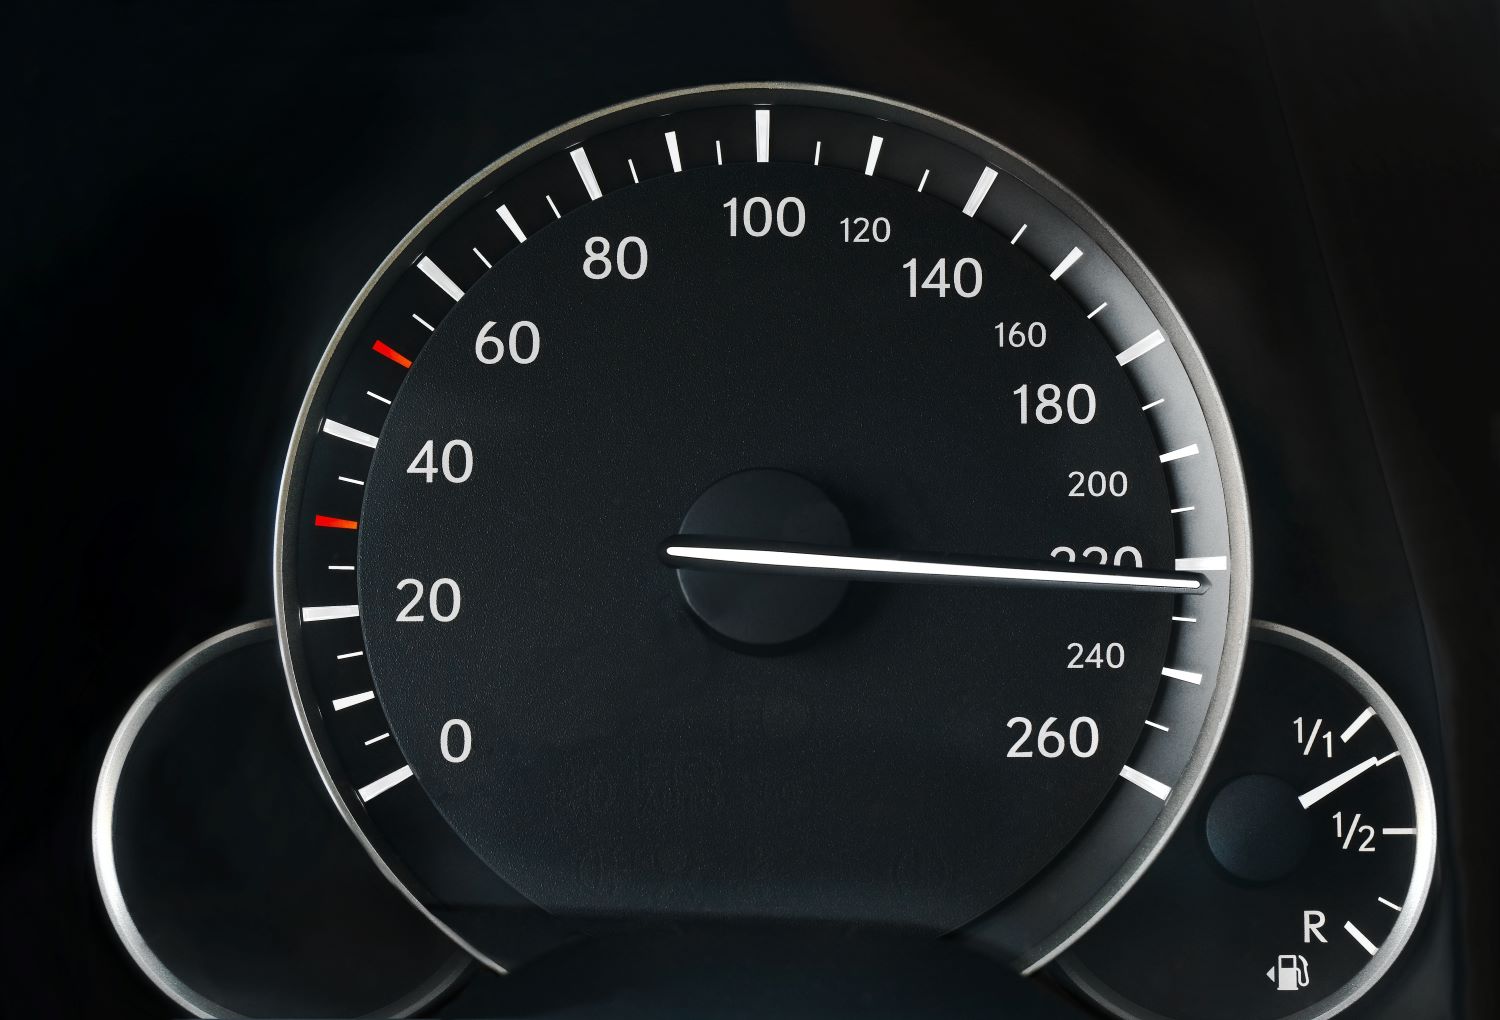 Record di 223 km orari in autostrada: patente sospesa